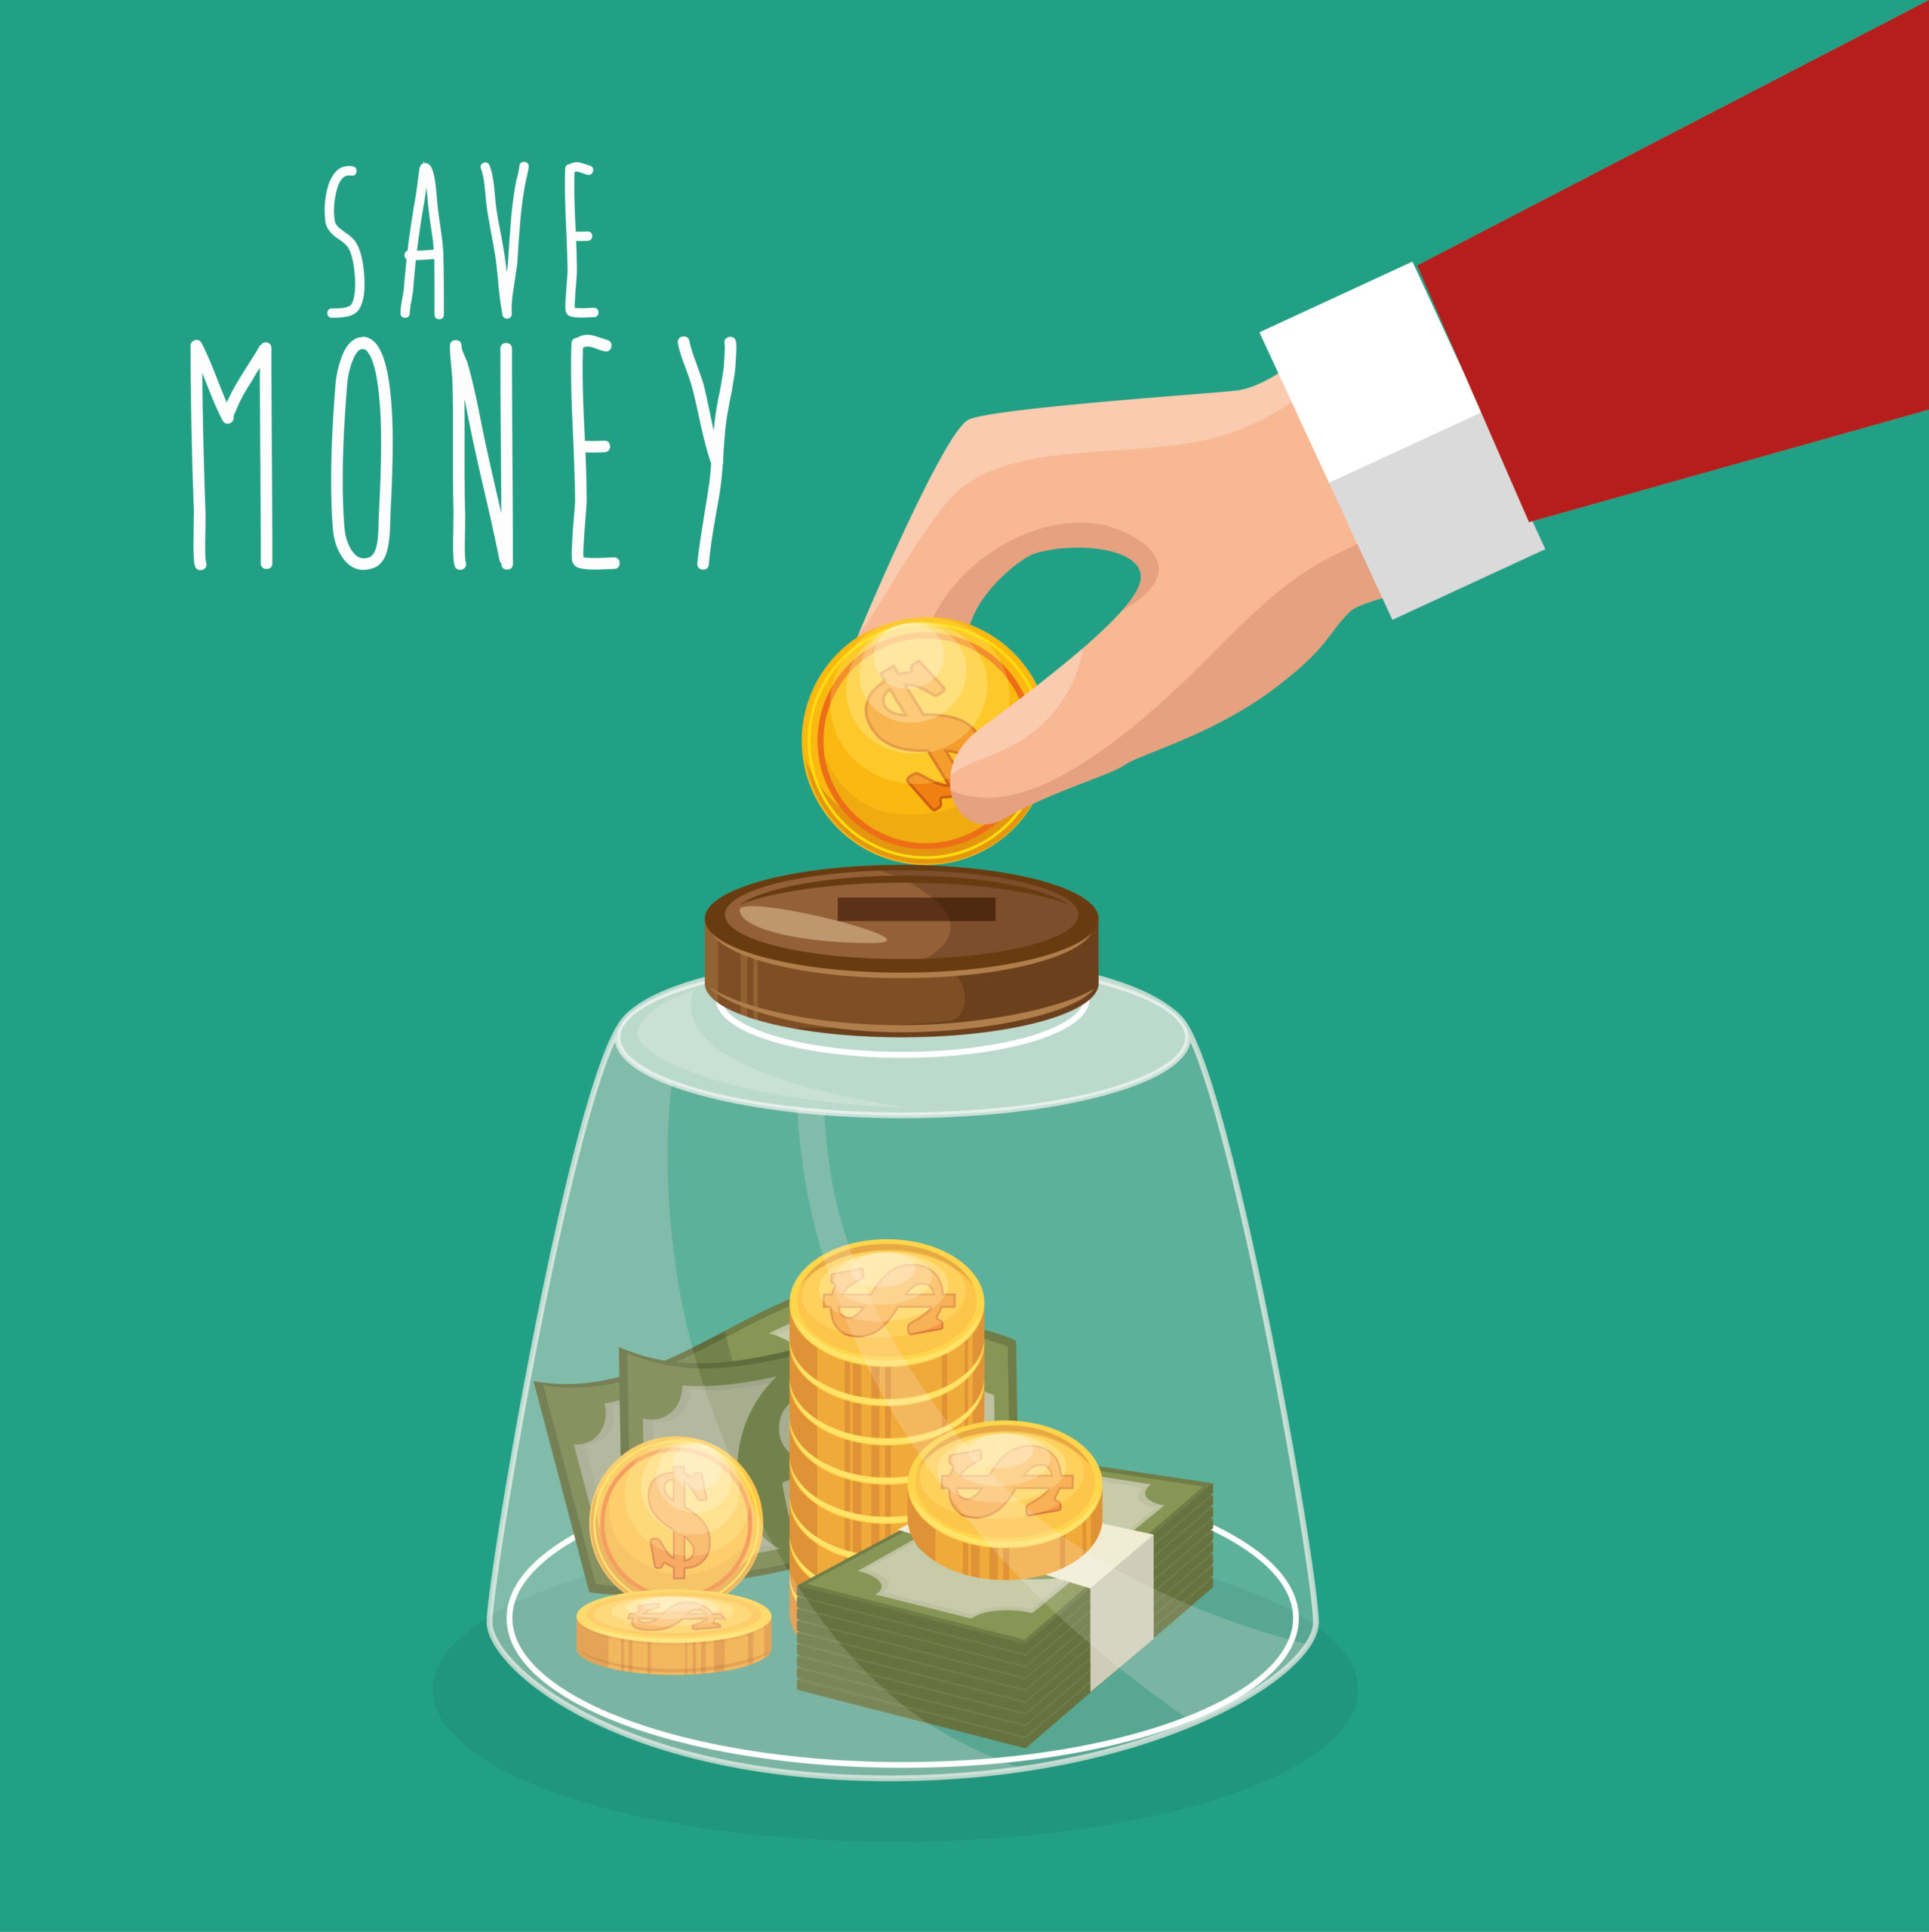 5 Practical Ways To Save Money